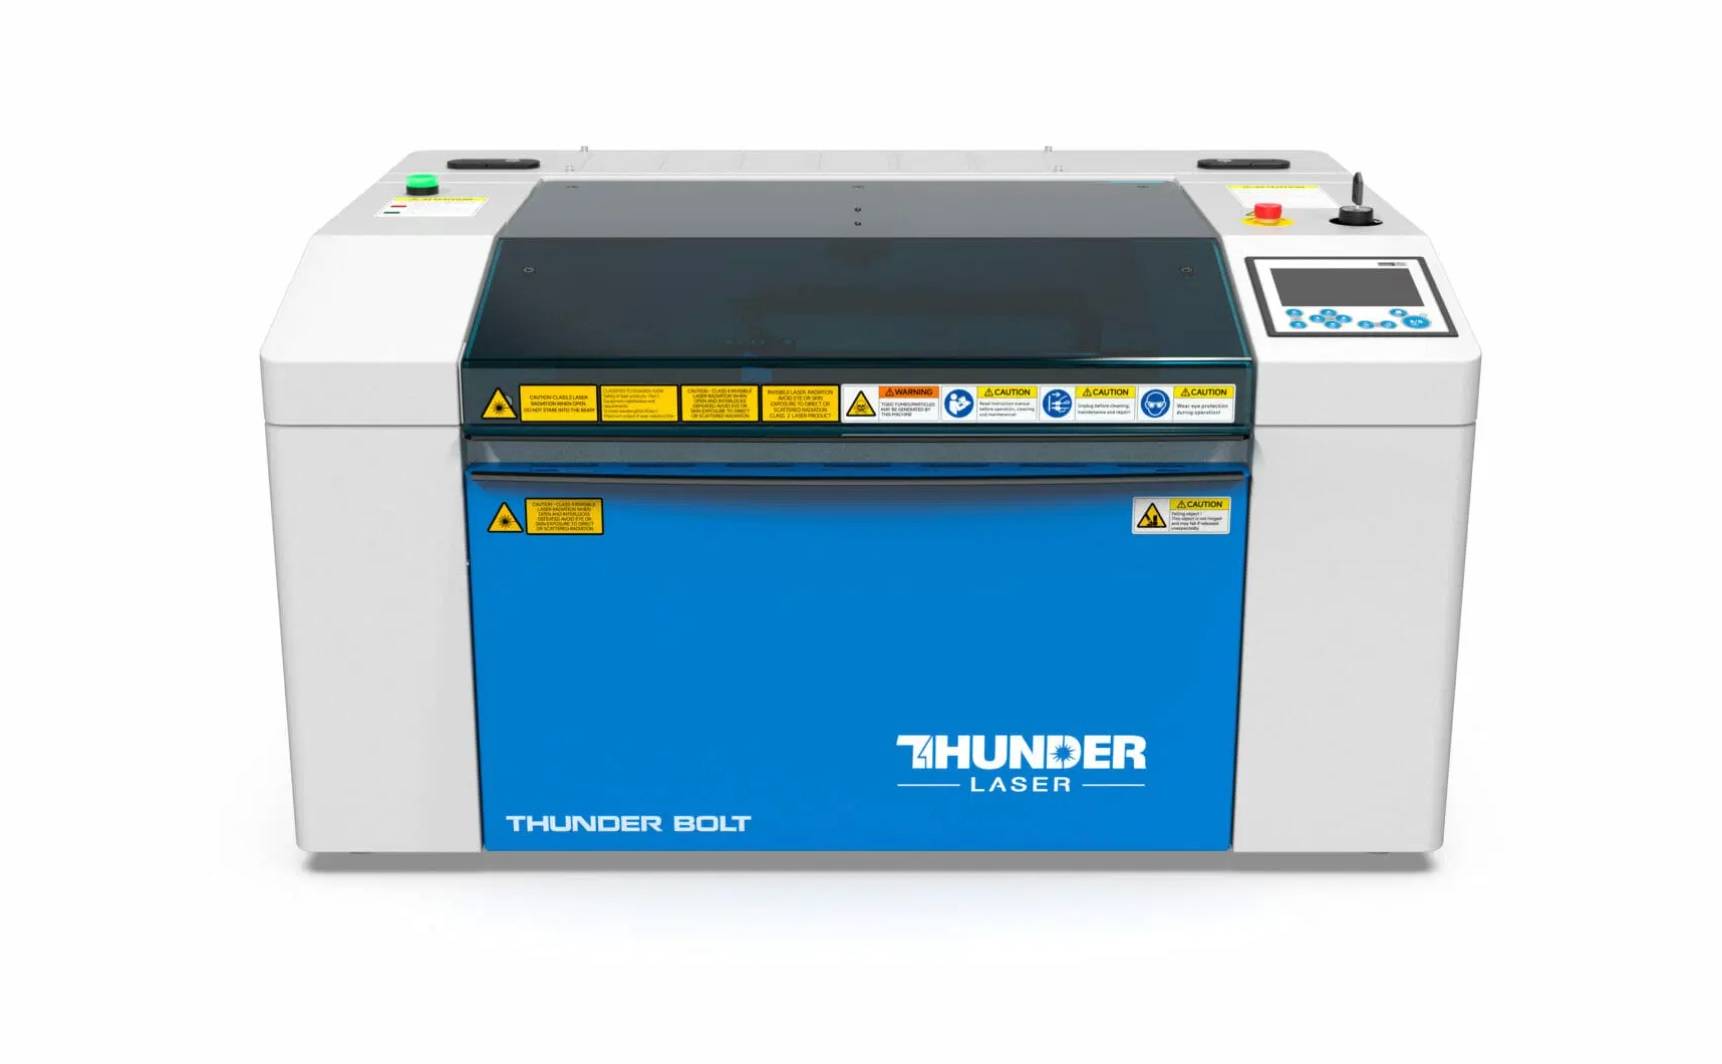 desktop laser cutter by Thunder Laser- the Thunder Bolt. A blue and white laser cutter machine